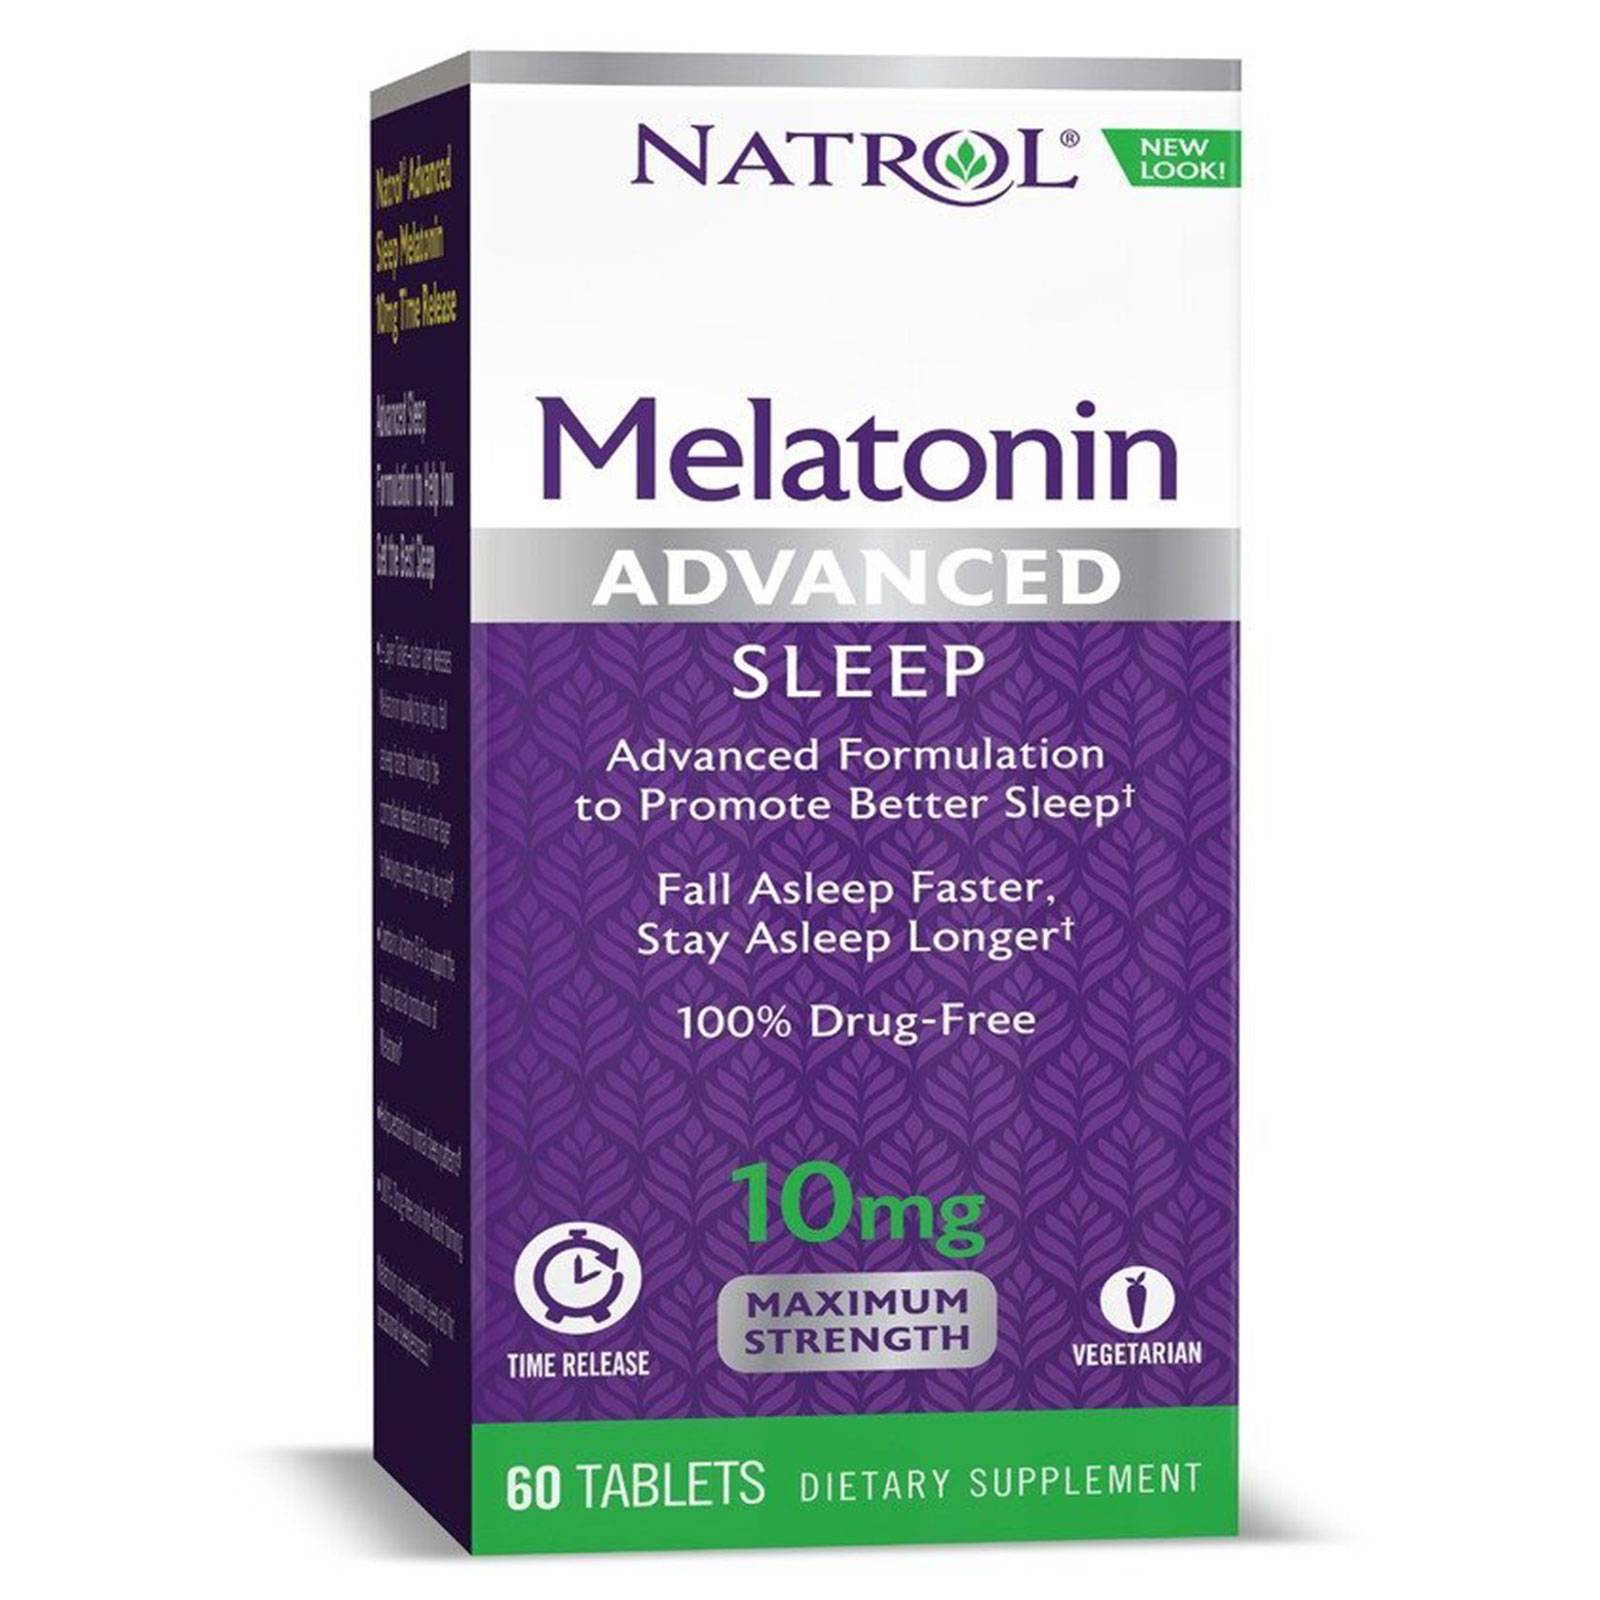 Natrol Advanced Sleep Melatonin 60ct